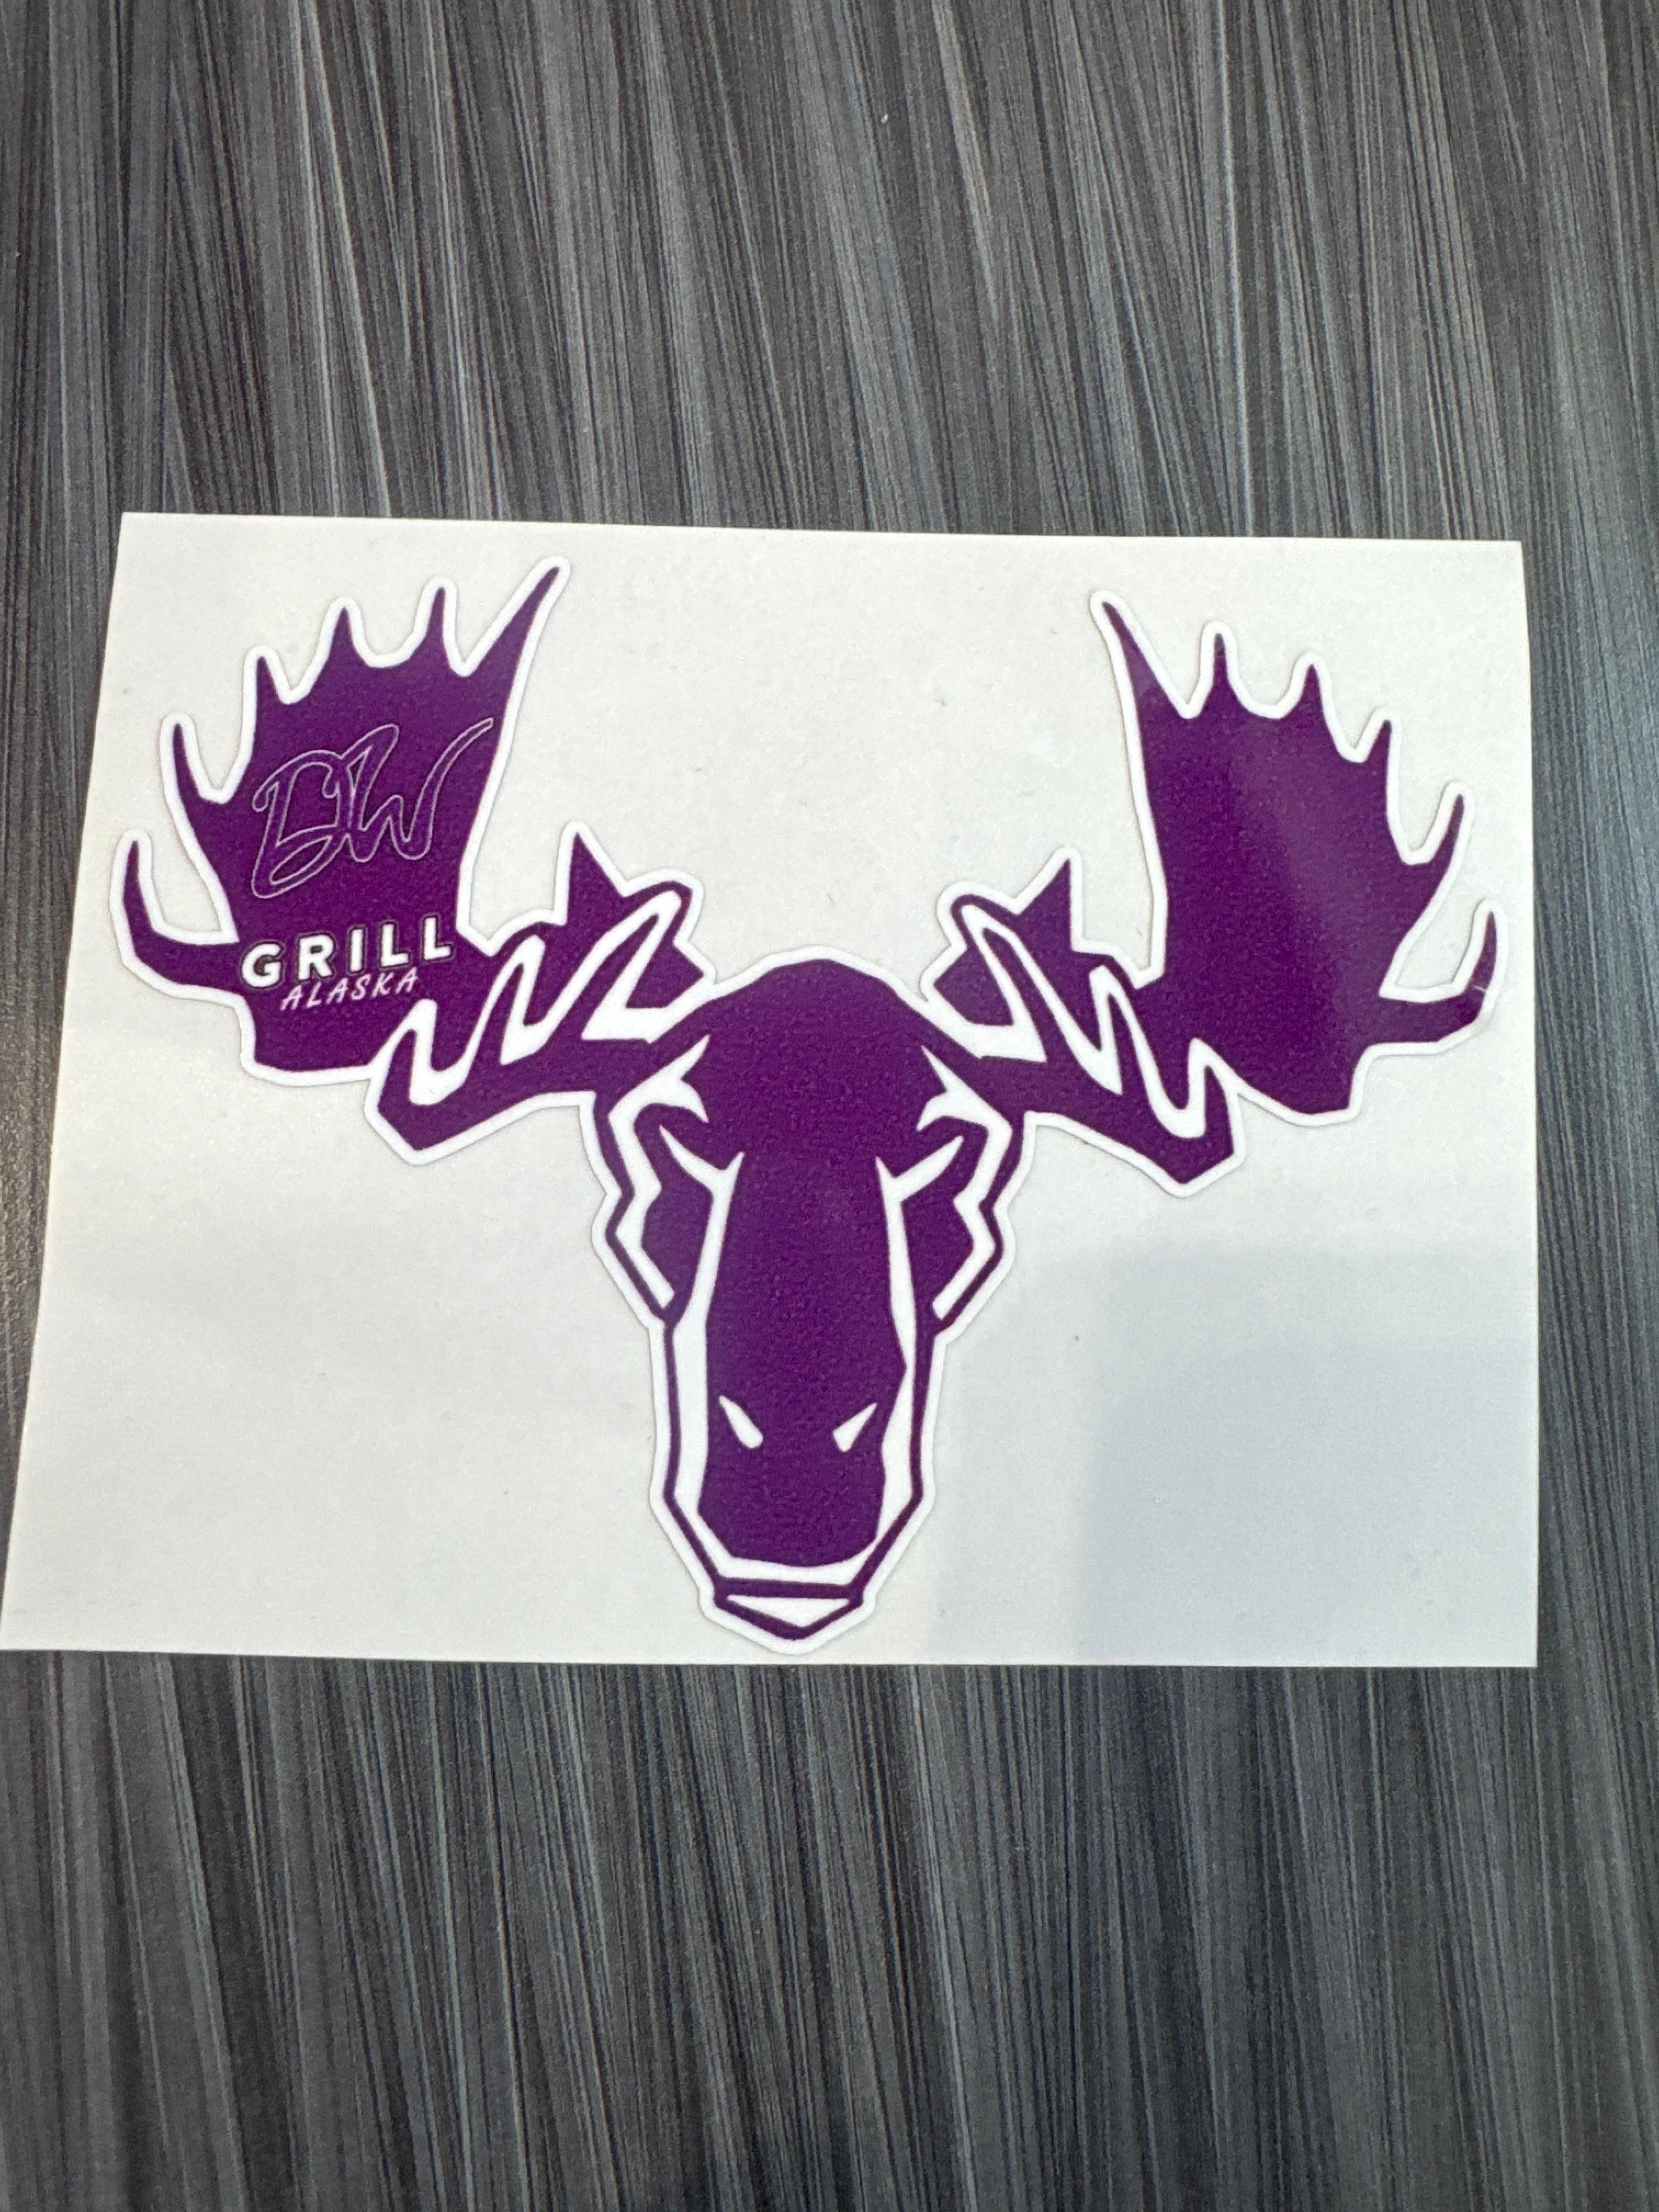 DW Moose sticker